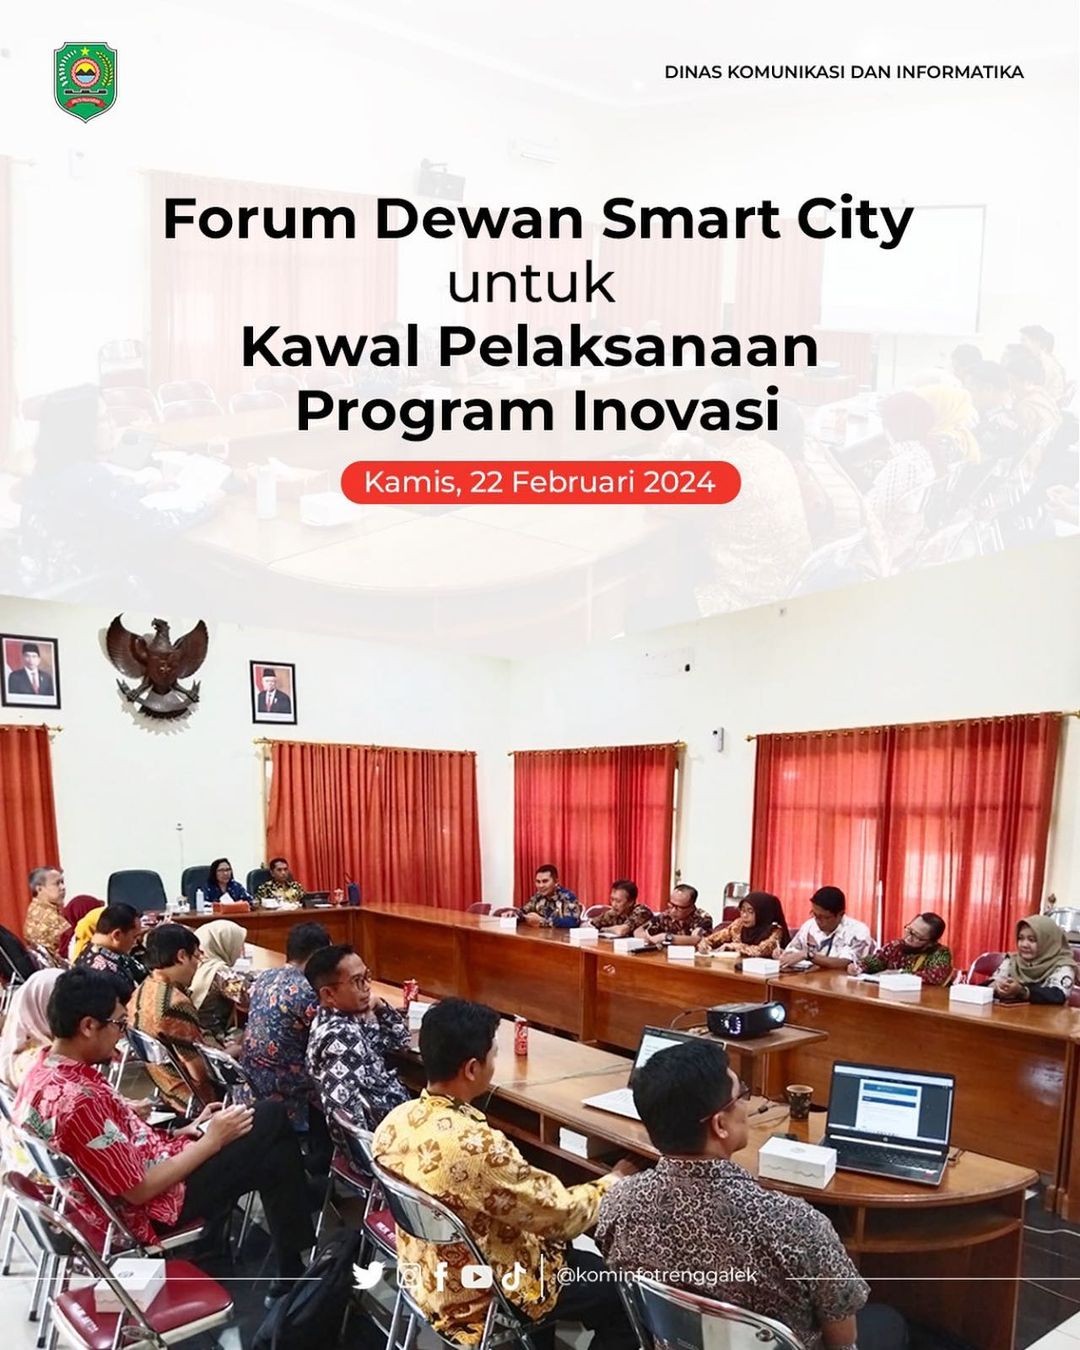 Forum Dewan Smart City Untuk Kawal Pelaksanaan Program Inovasi